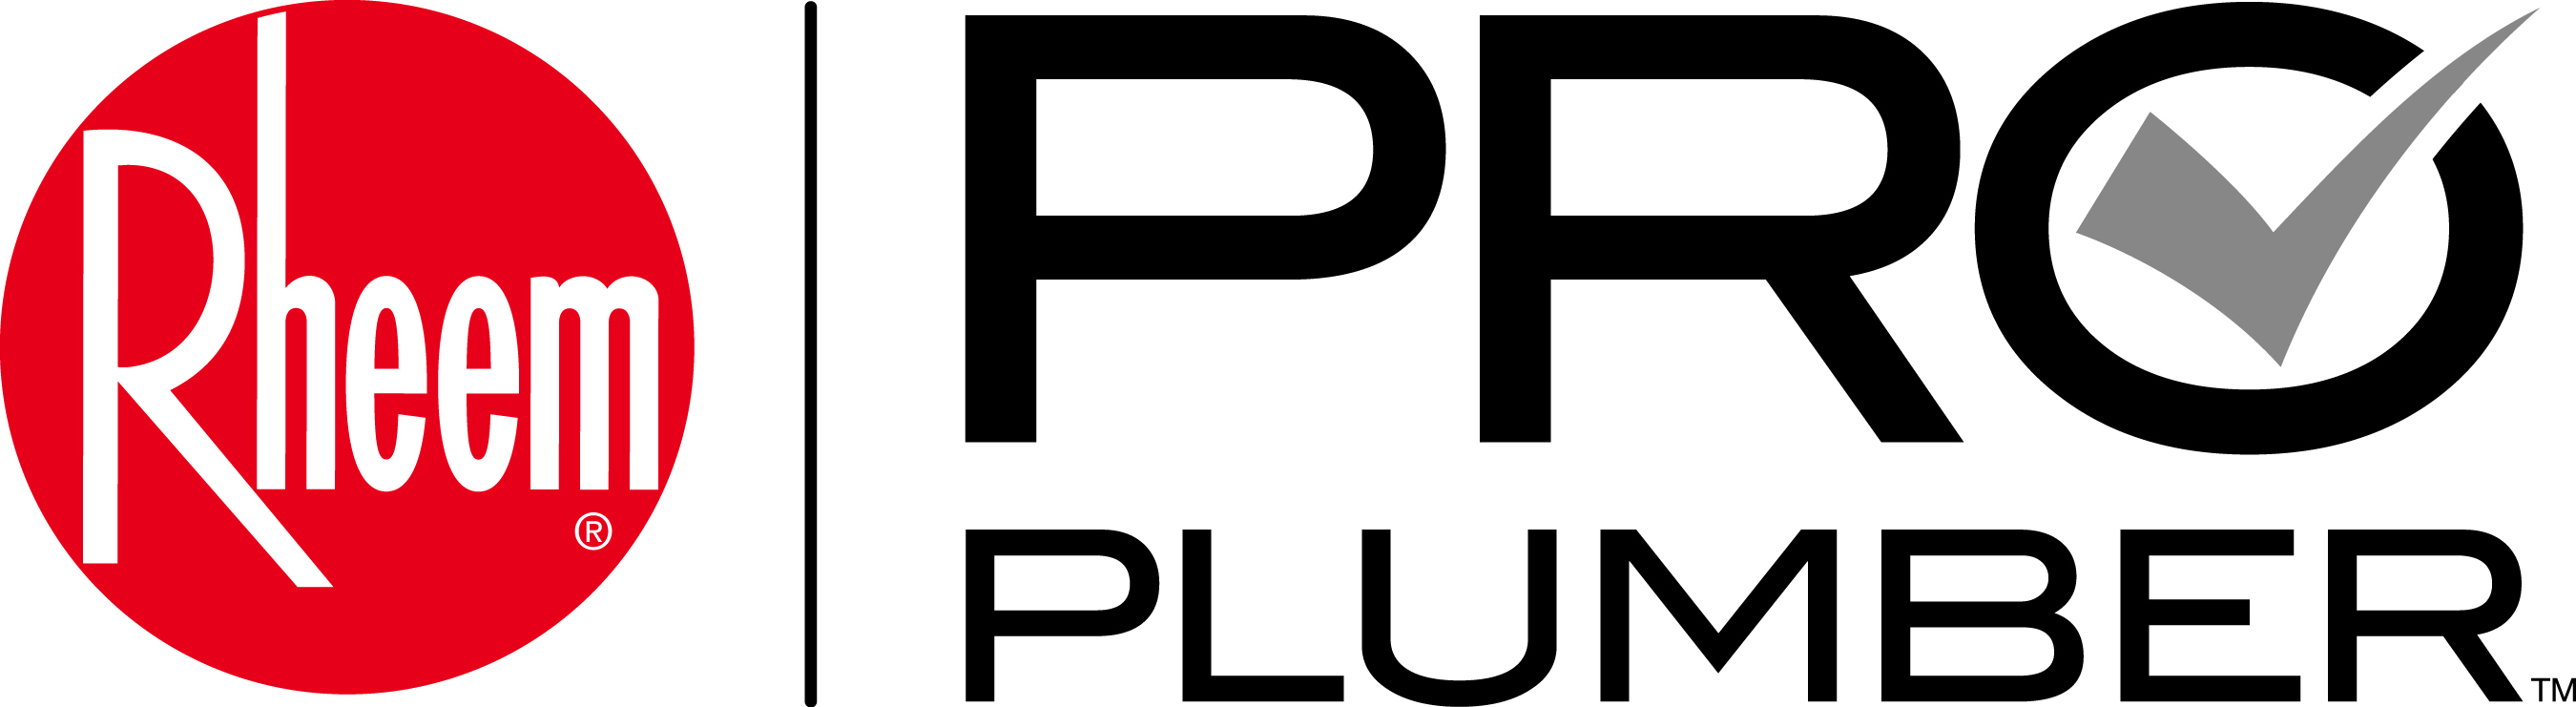 Rheem Pro Plumber Logo